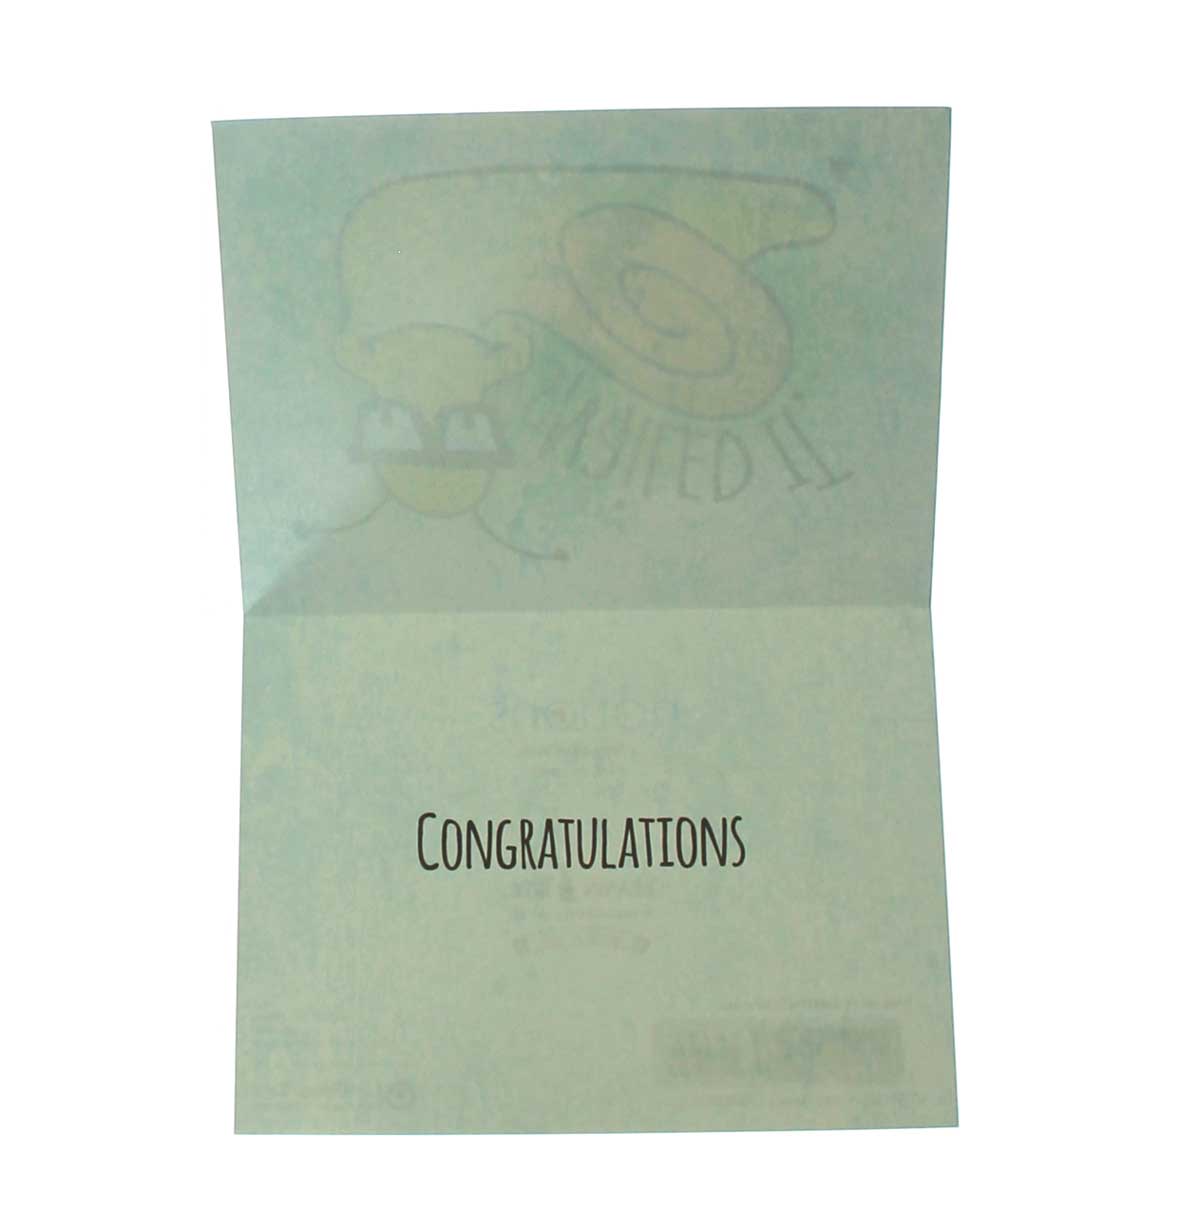 Congratulations Card: Snailed it.